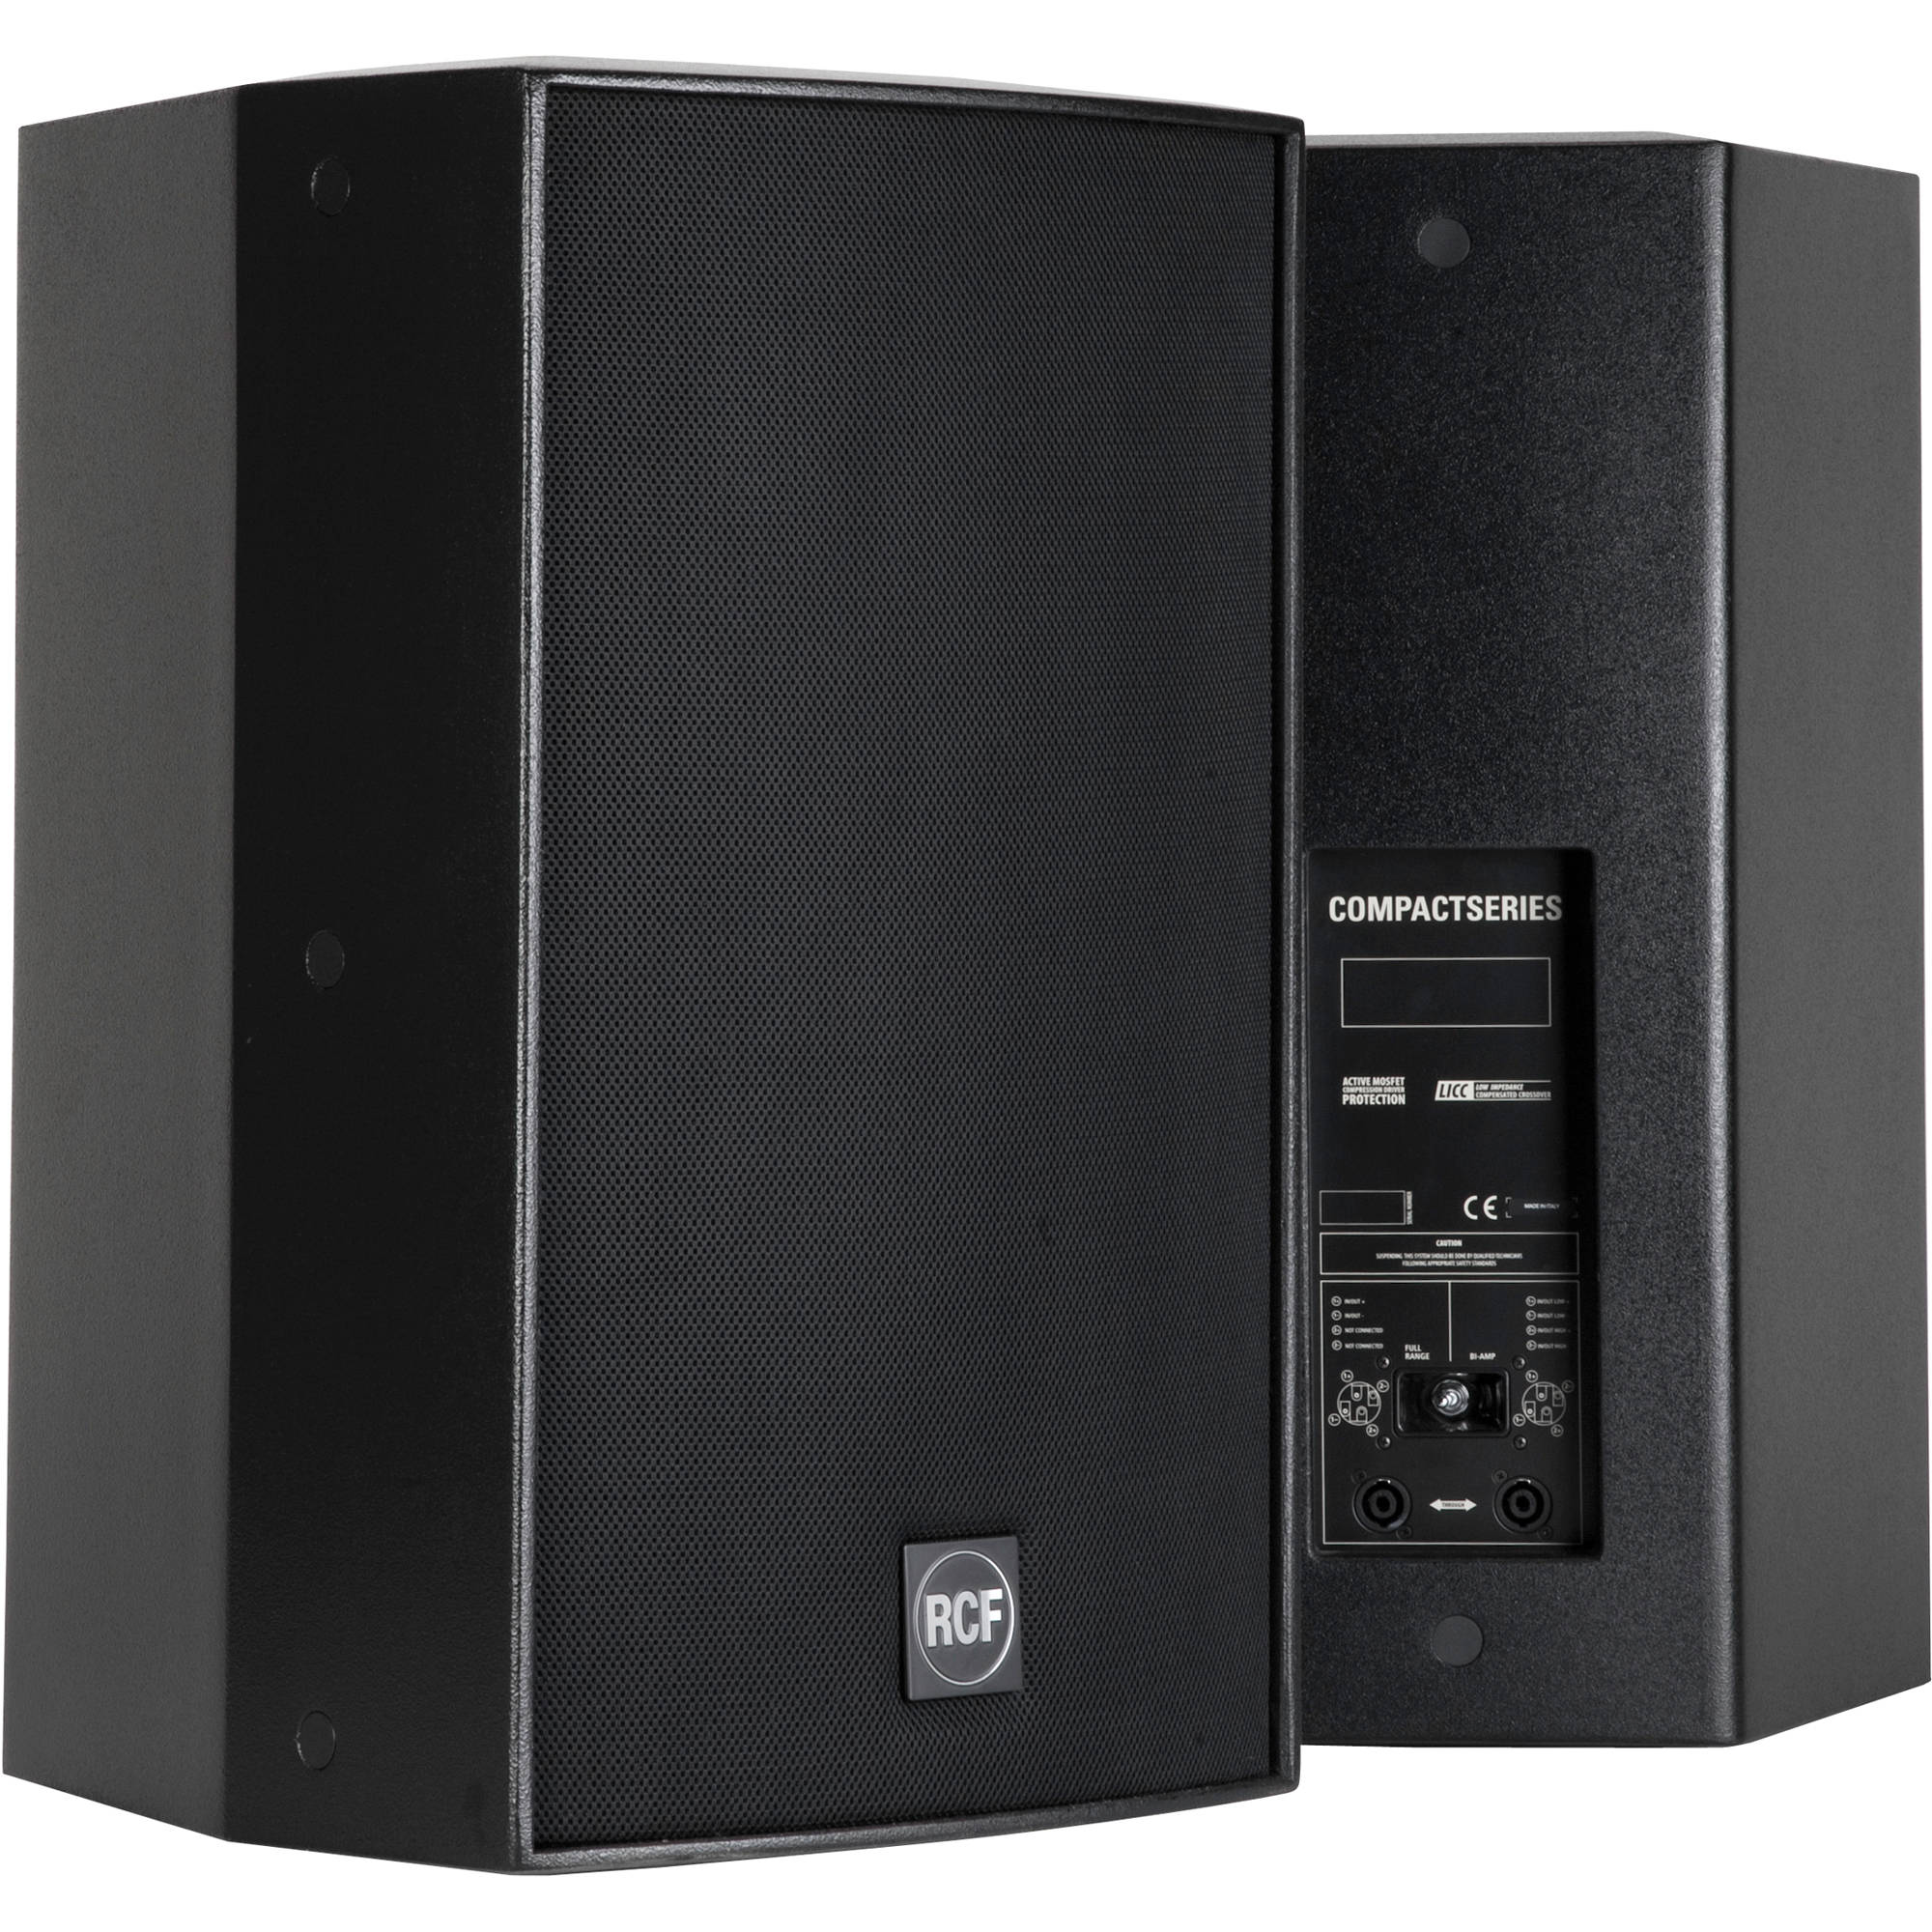 rcf speakers 500 watts price